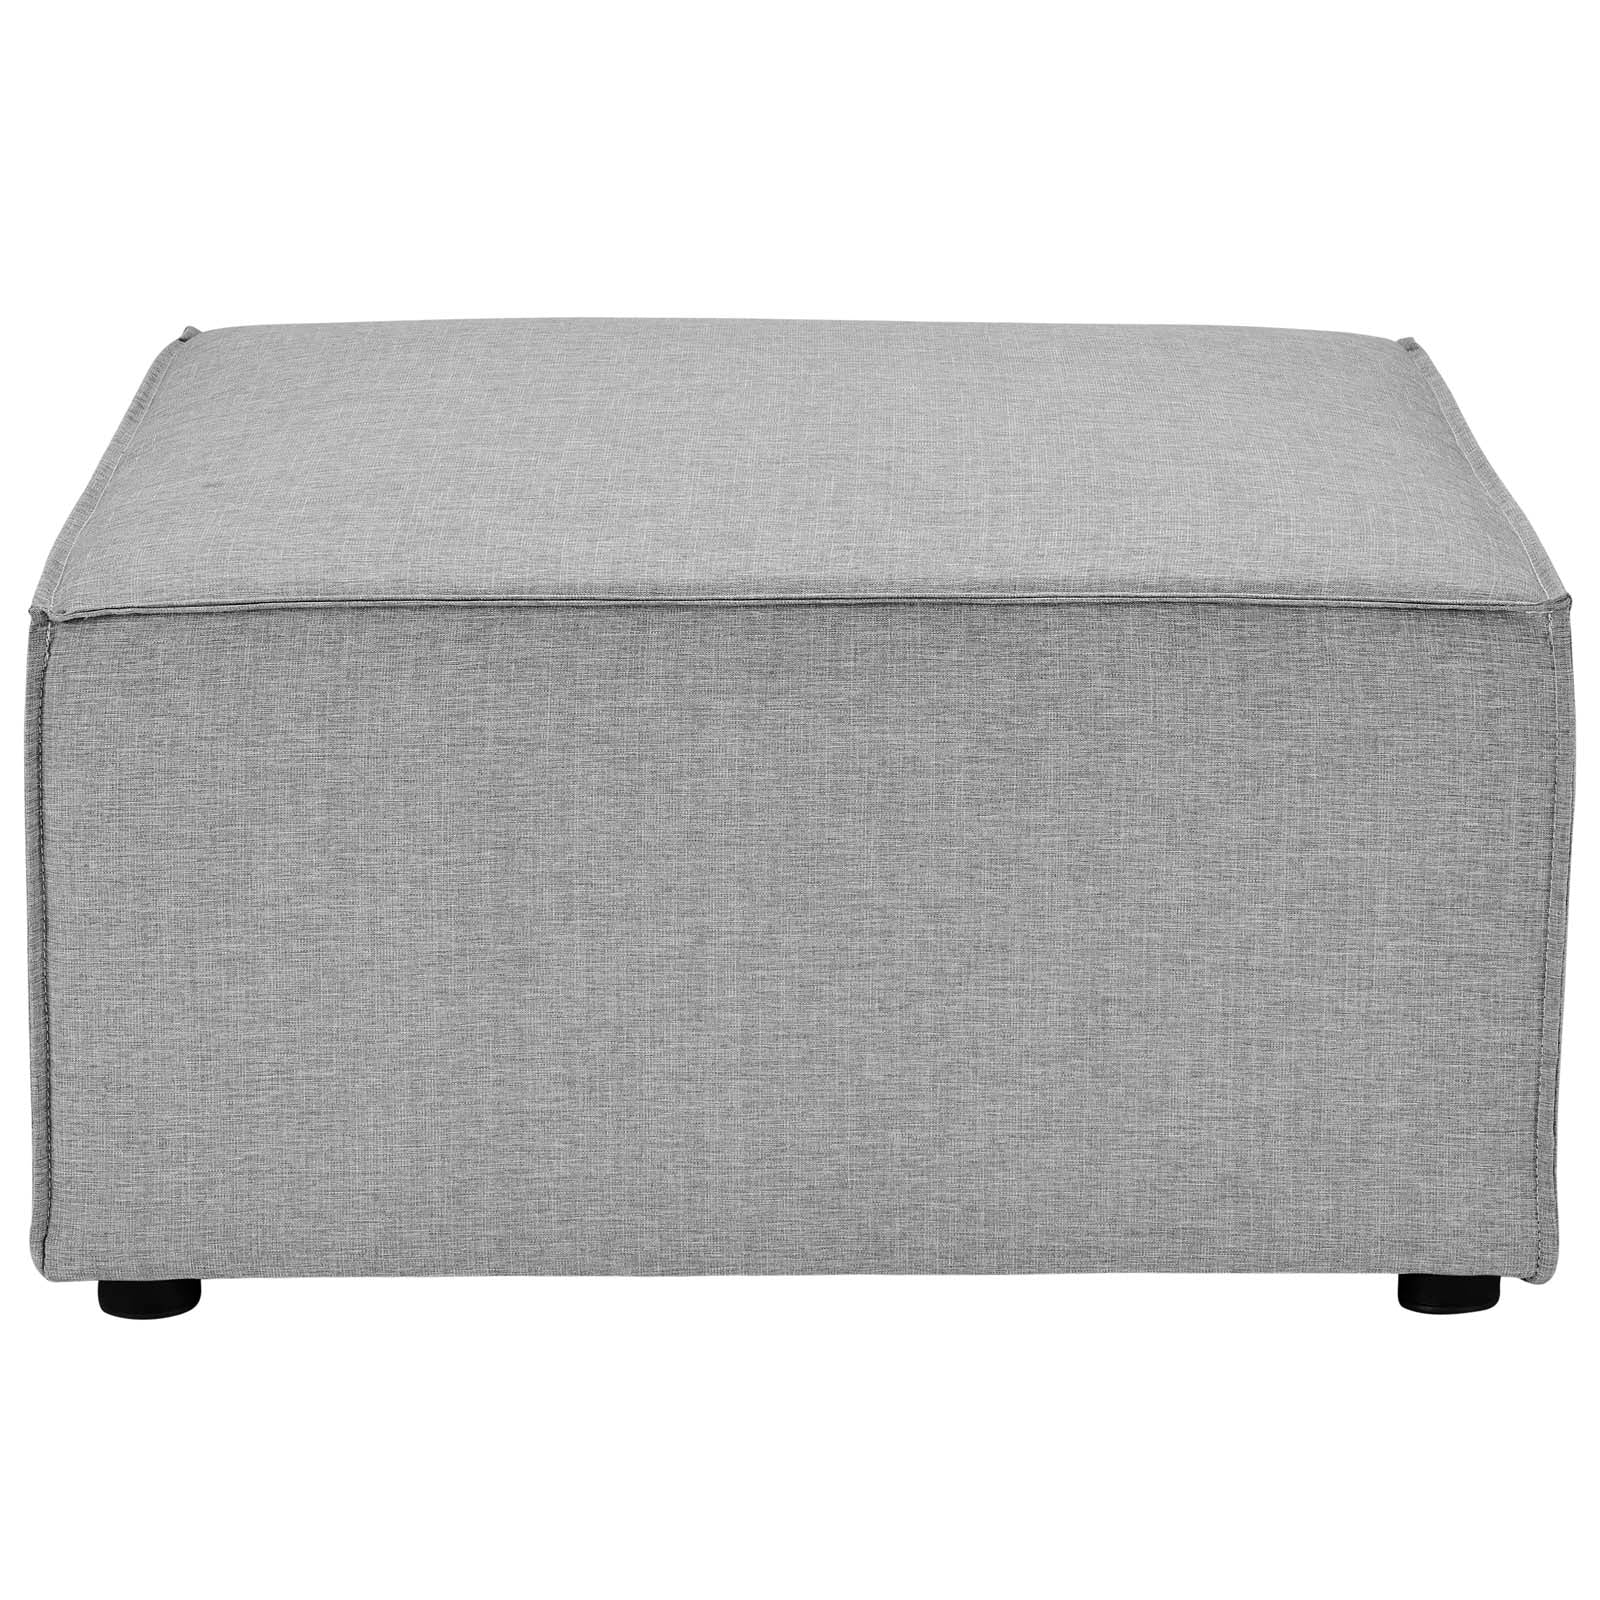 Modway Outdoor Sofas - Saybrook Outdoor Patio 6 Piece Sectional Sofa Gray